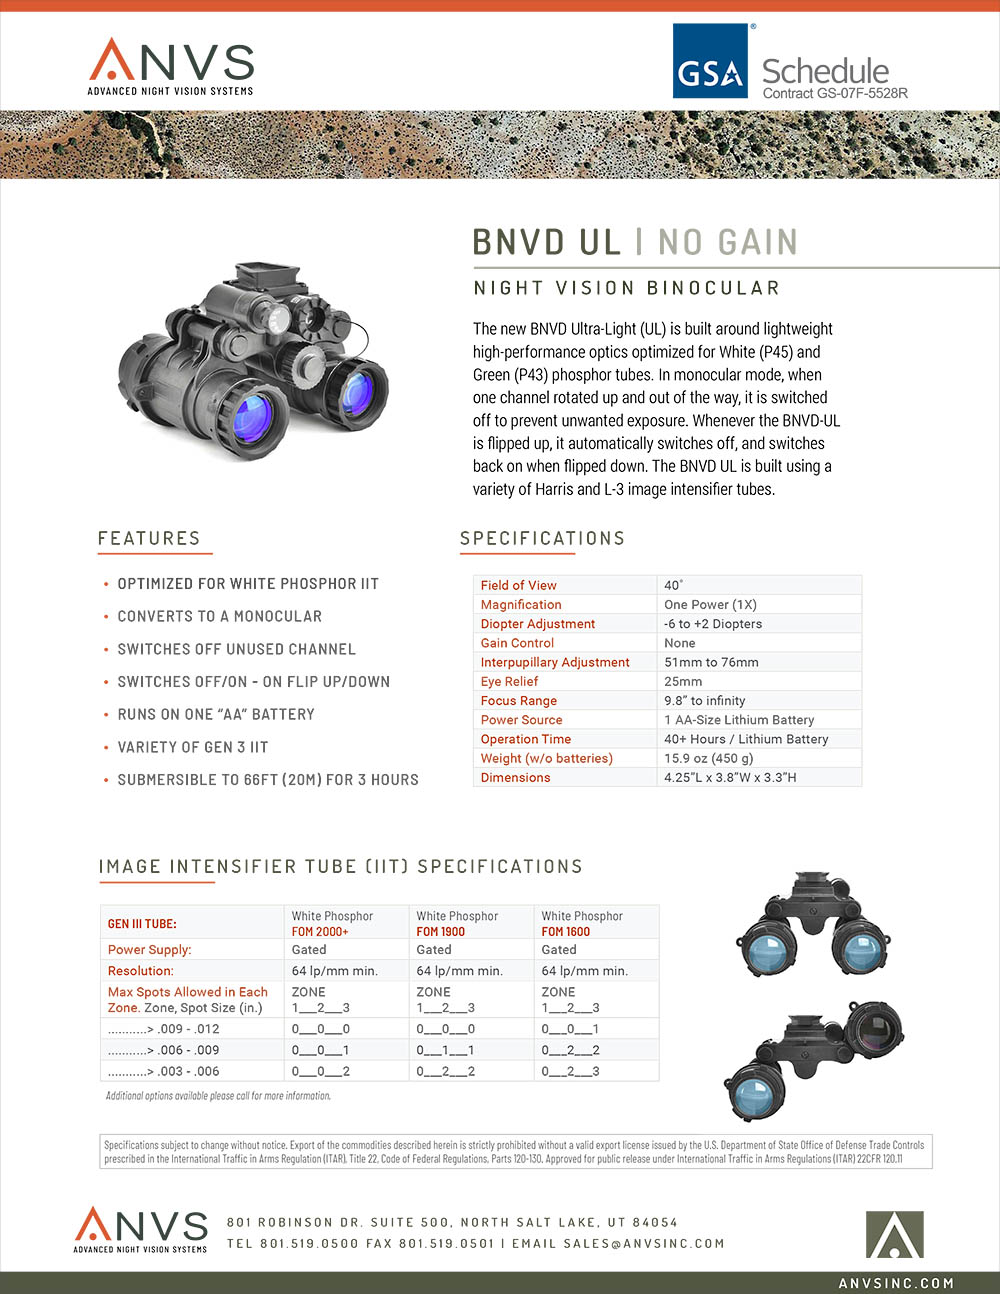 BNVD SG UL -data-sheet